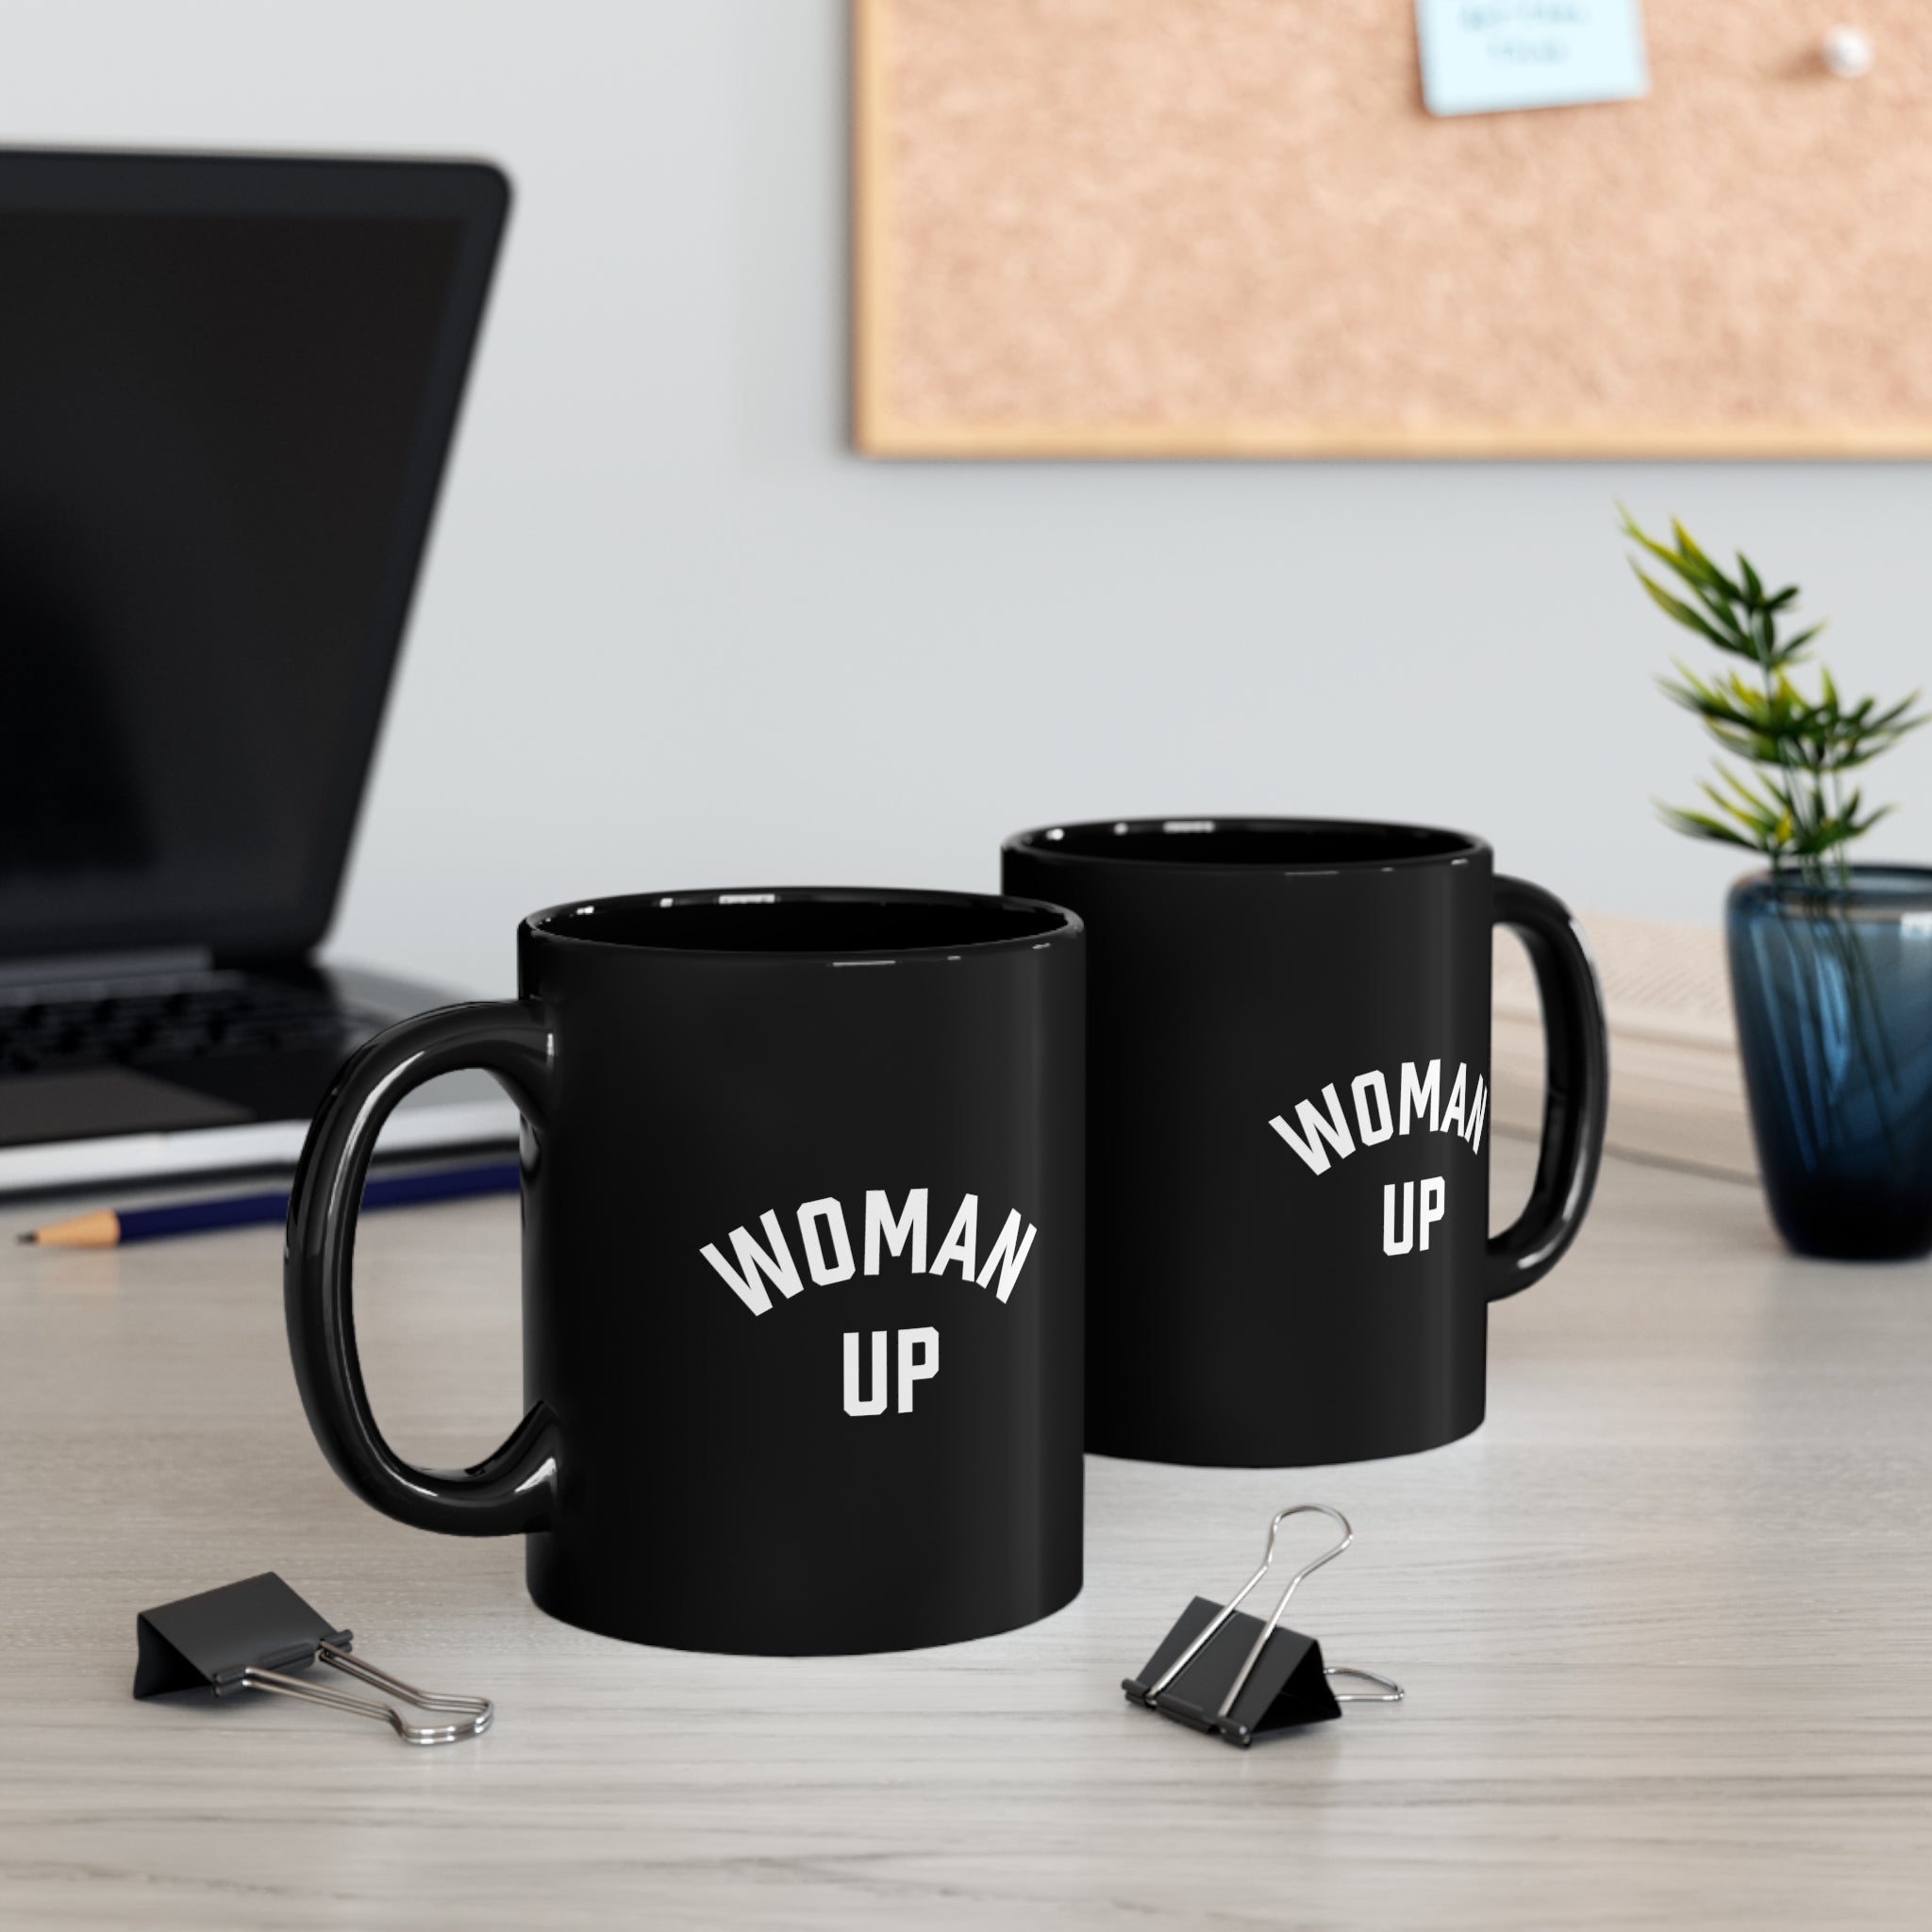 Woman Up Black Mug